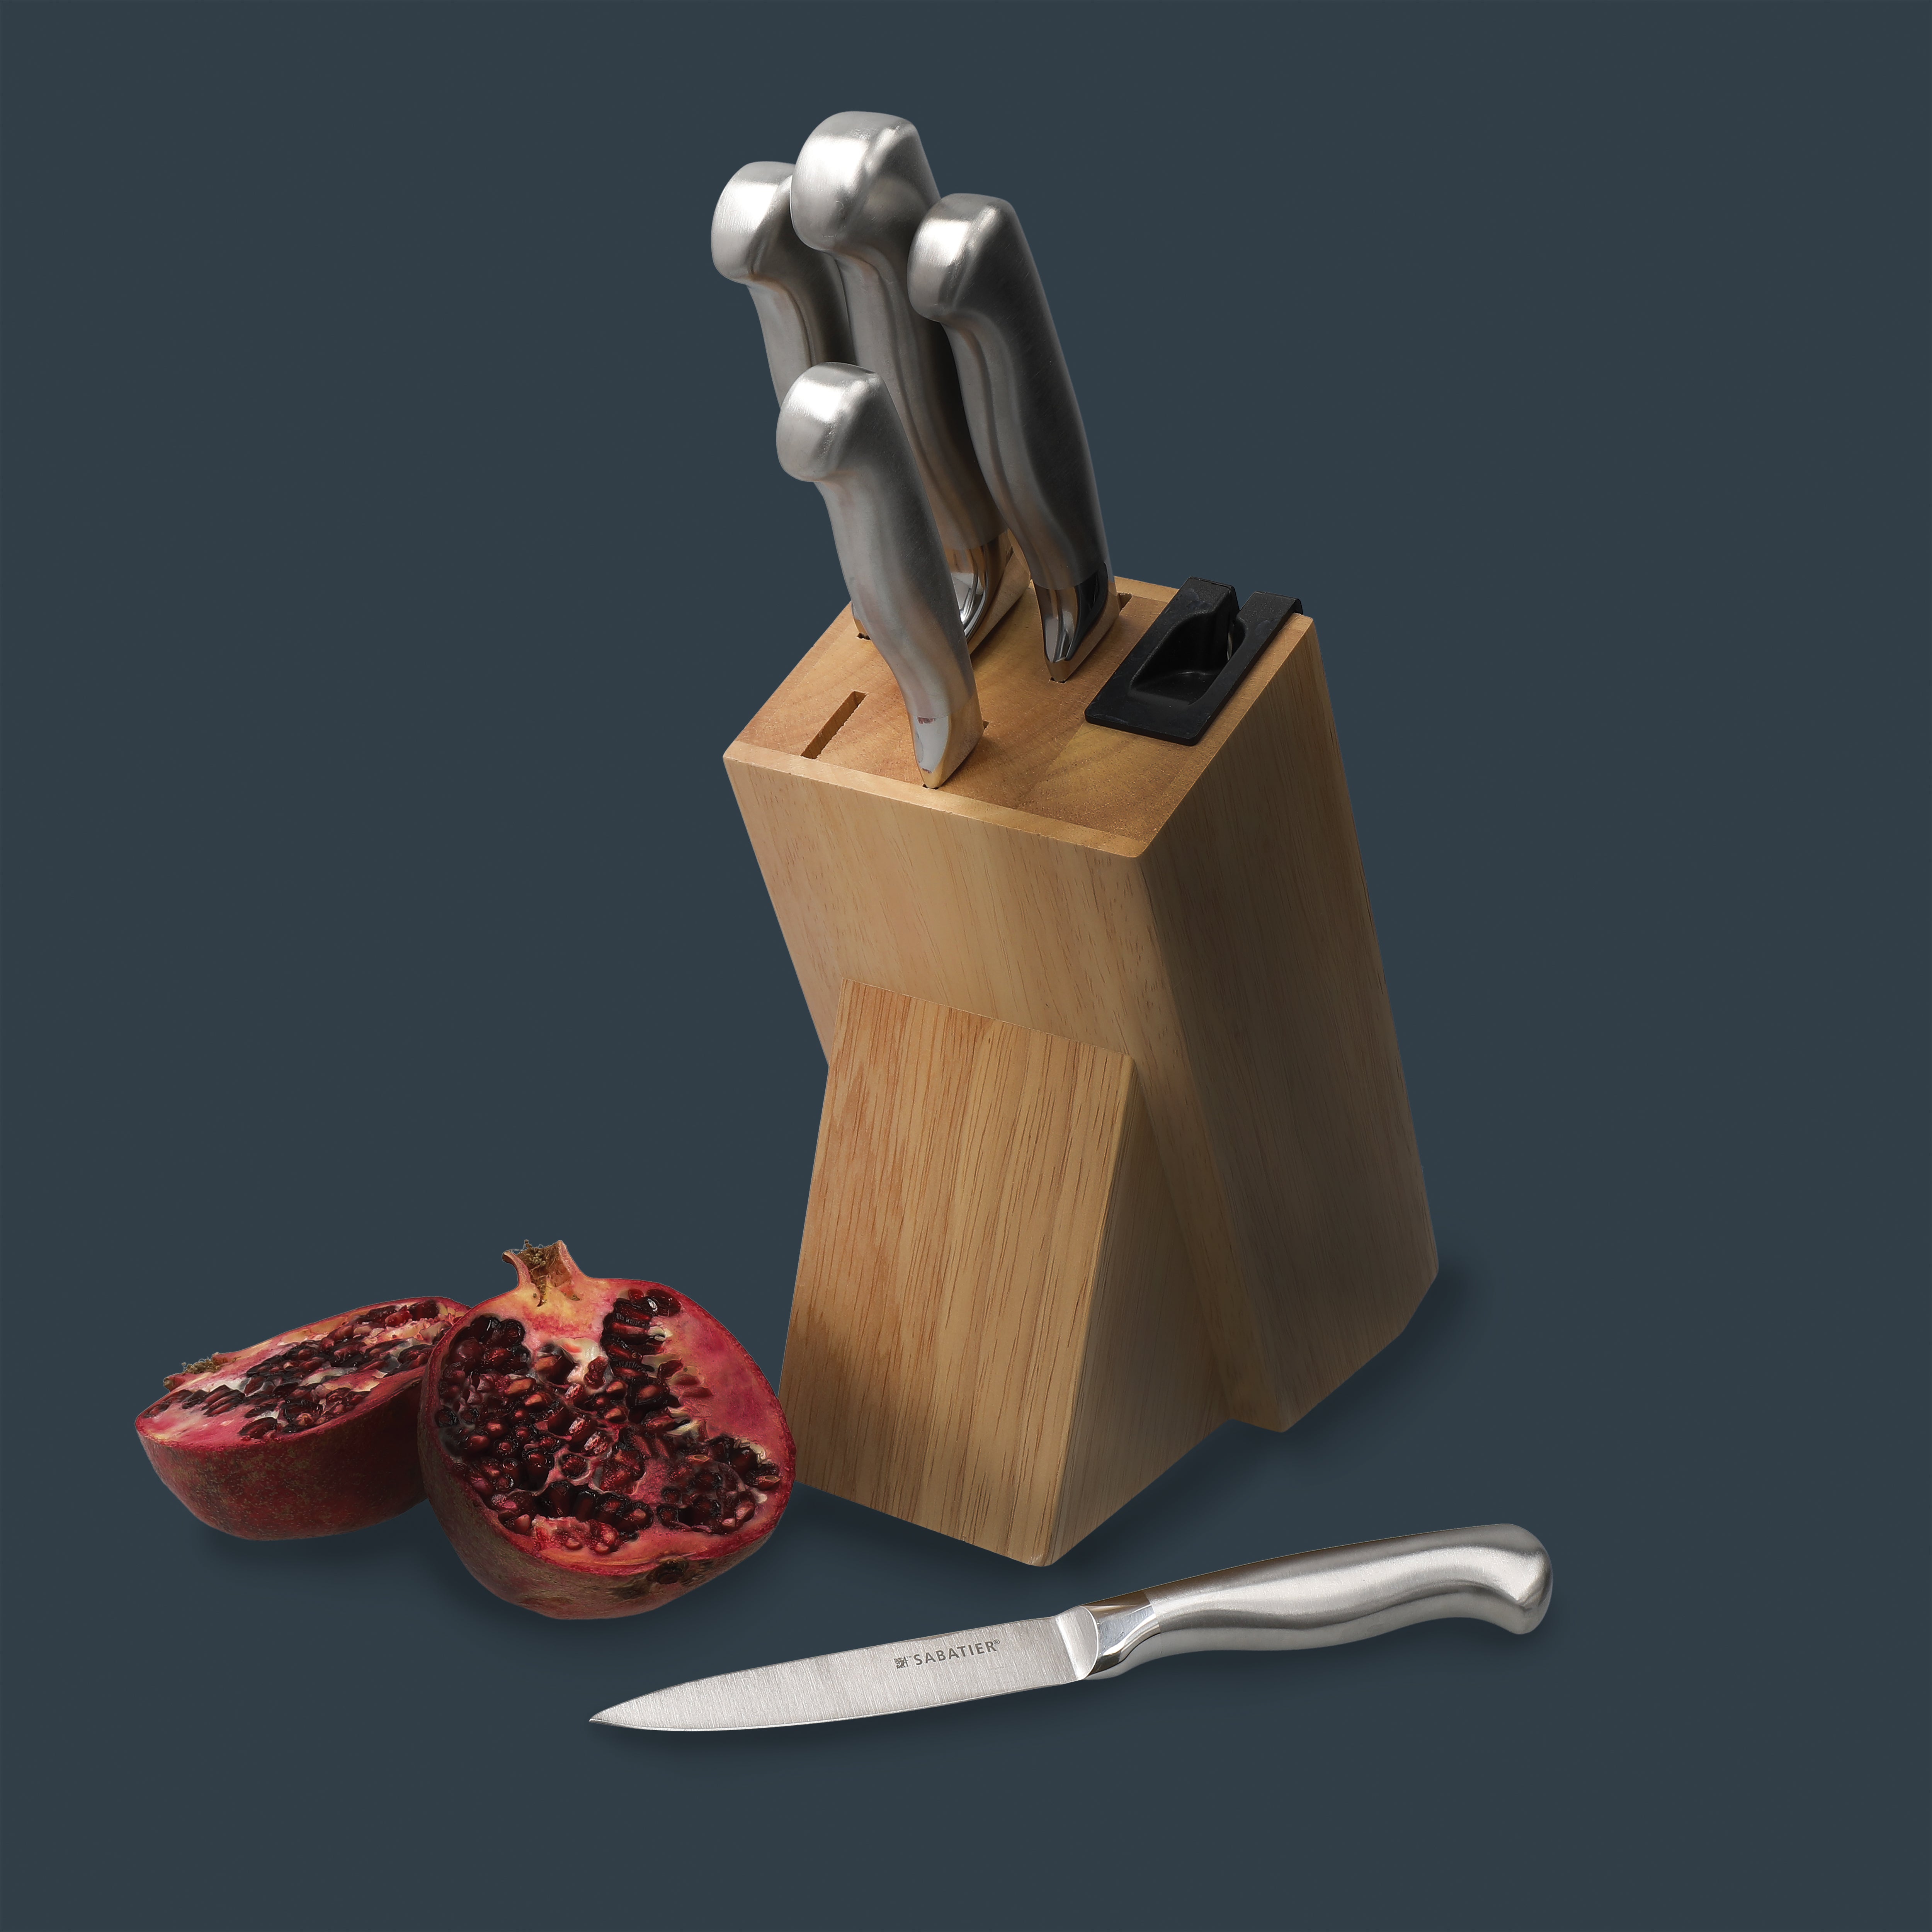 Sabatier Professional 5 Piece Kitchen Knife Set & Oak Knife Block